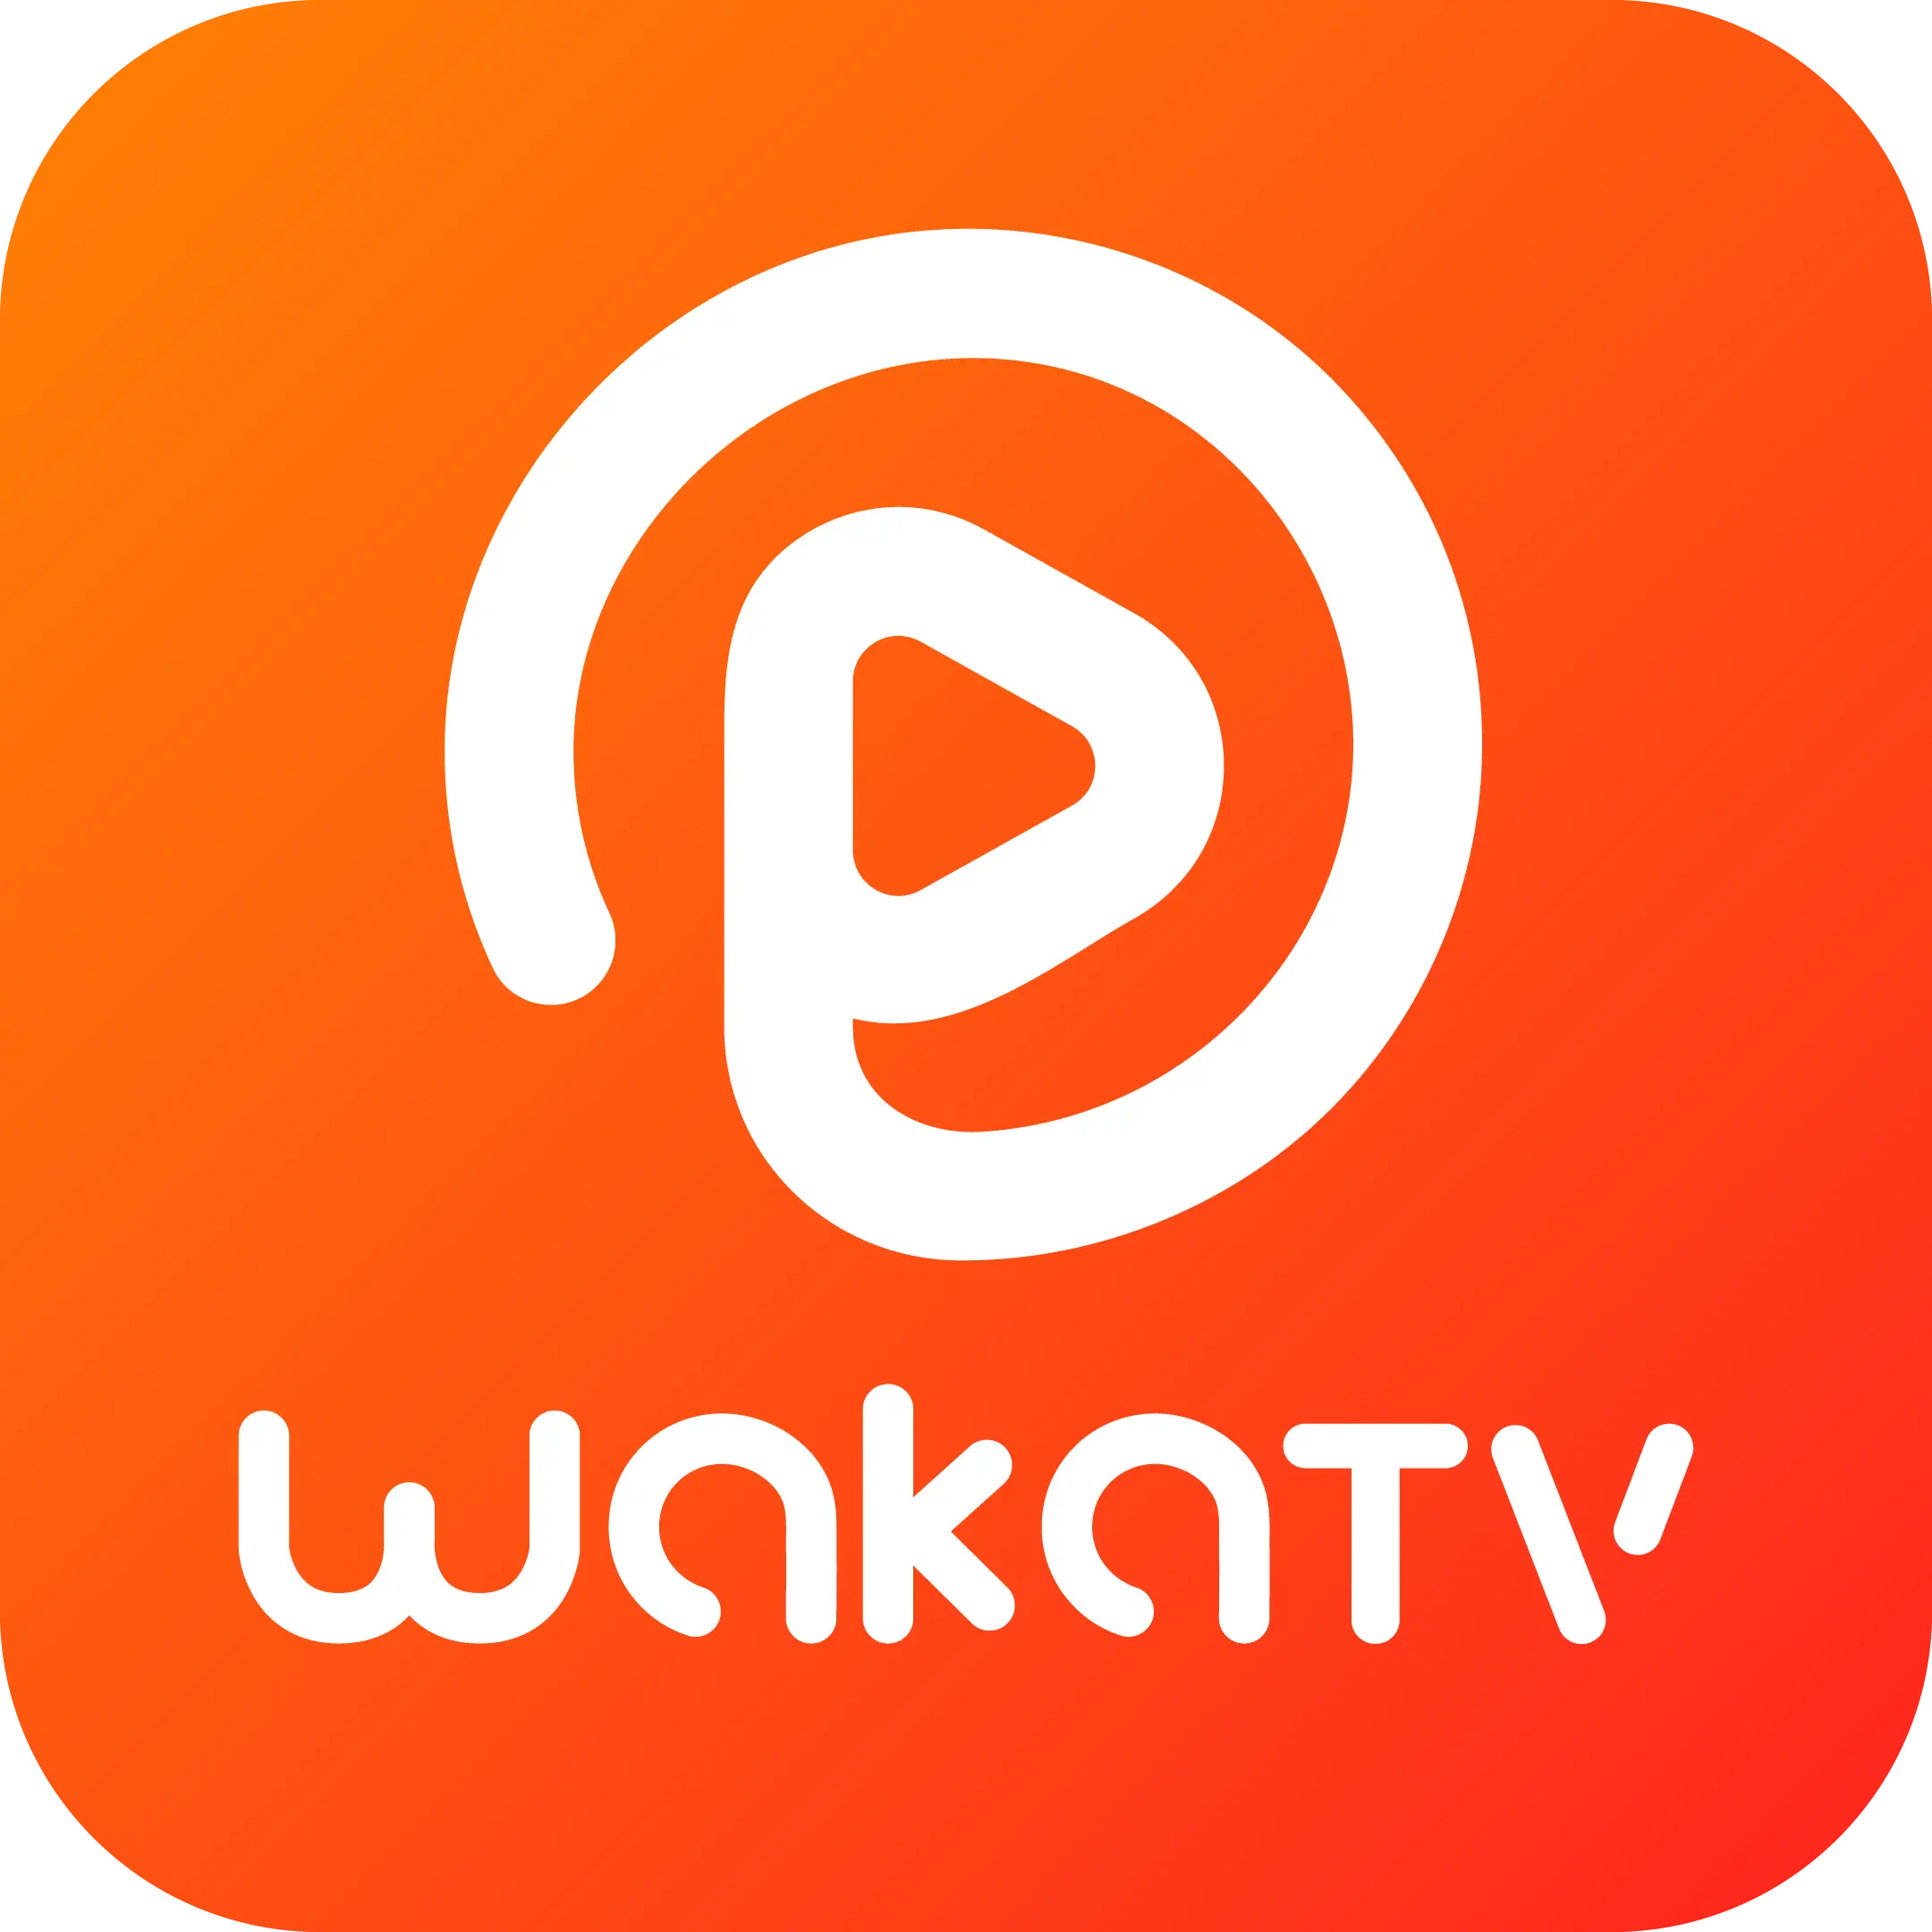 Waka TV Wakatv mes anual en vivo y VOD para África Sudáfrica para FireTV MI TV Stick Android TV BOX Smartphones